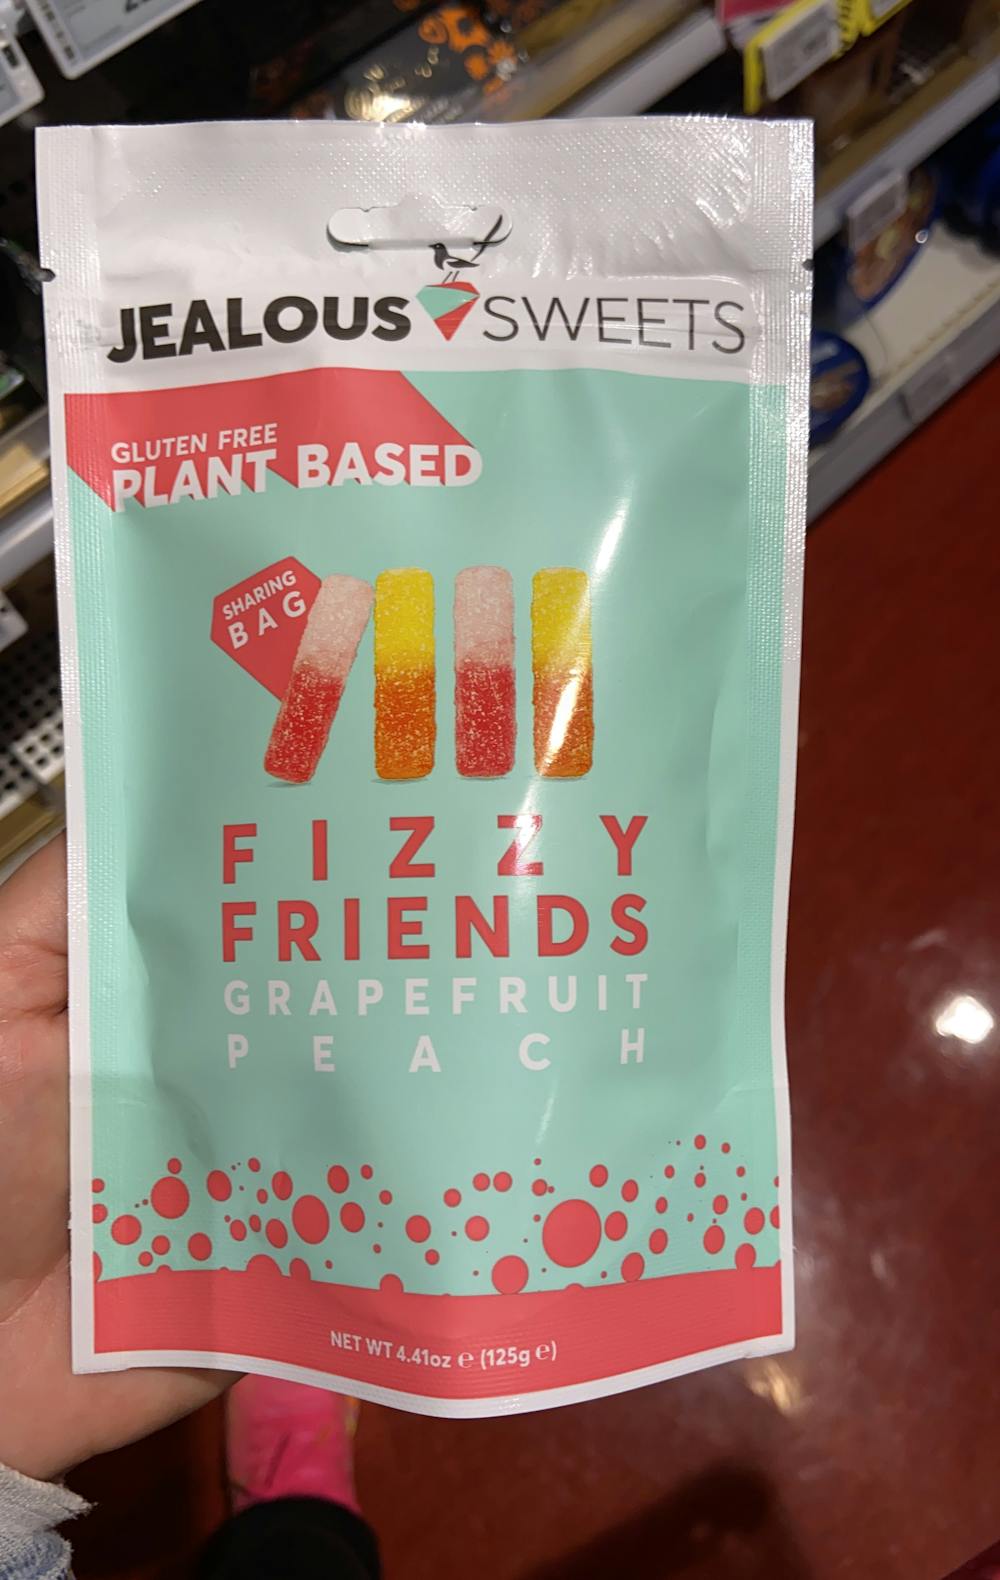 Fizzy friends, grapefruit peach, Jelous sweets